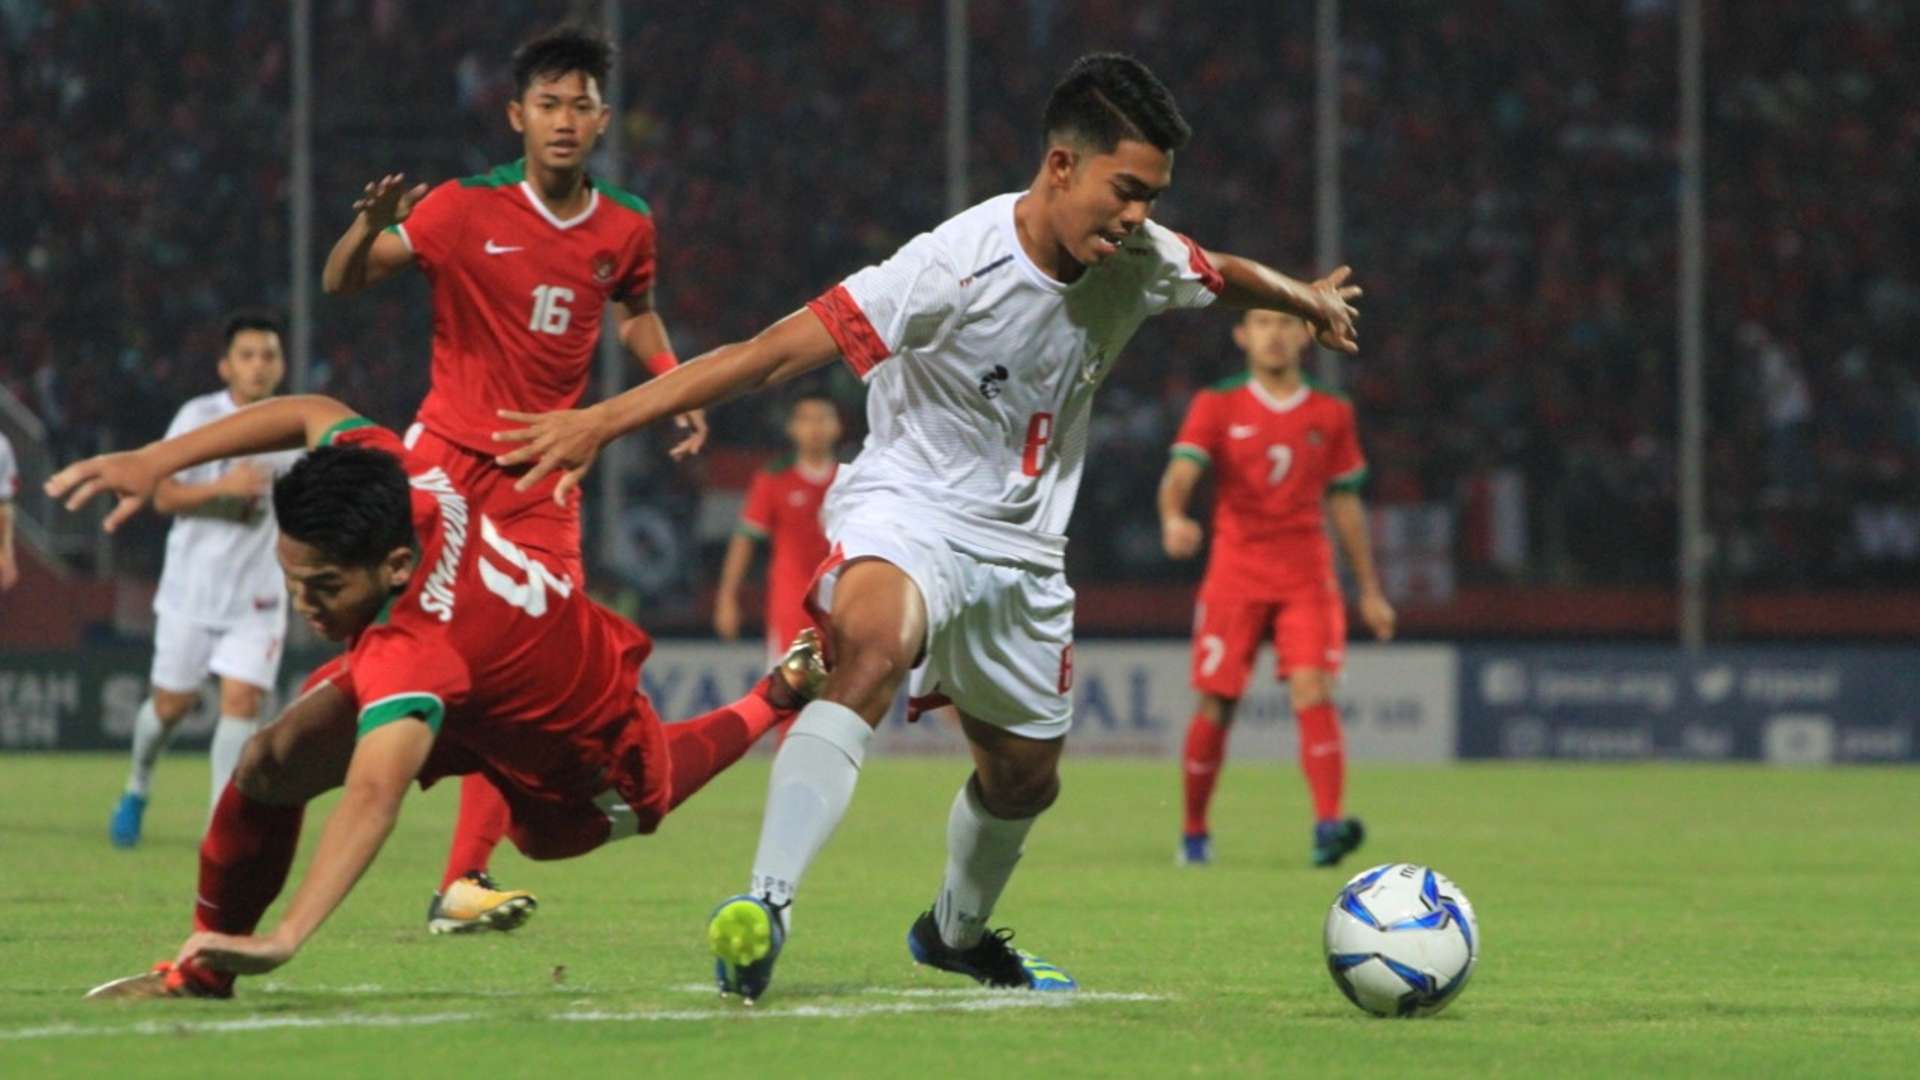 Piala AFF U-19 Filipina vs Indonesia